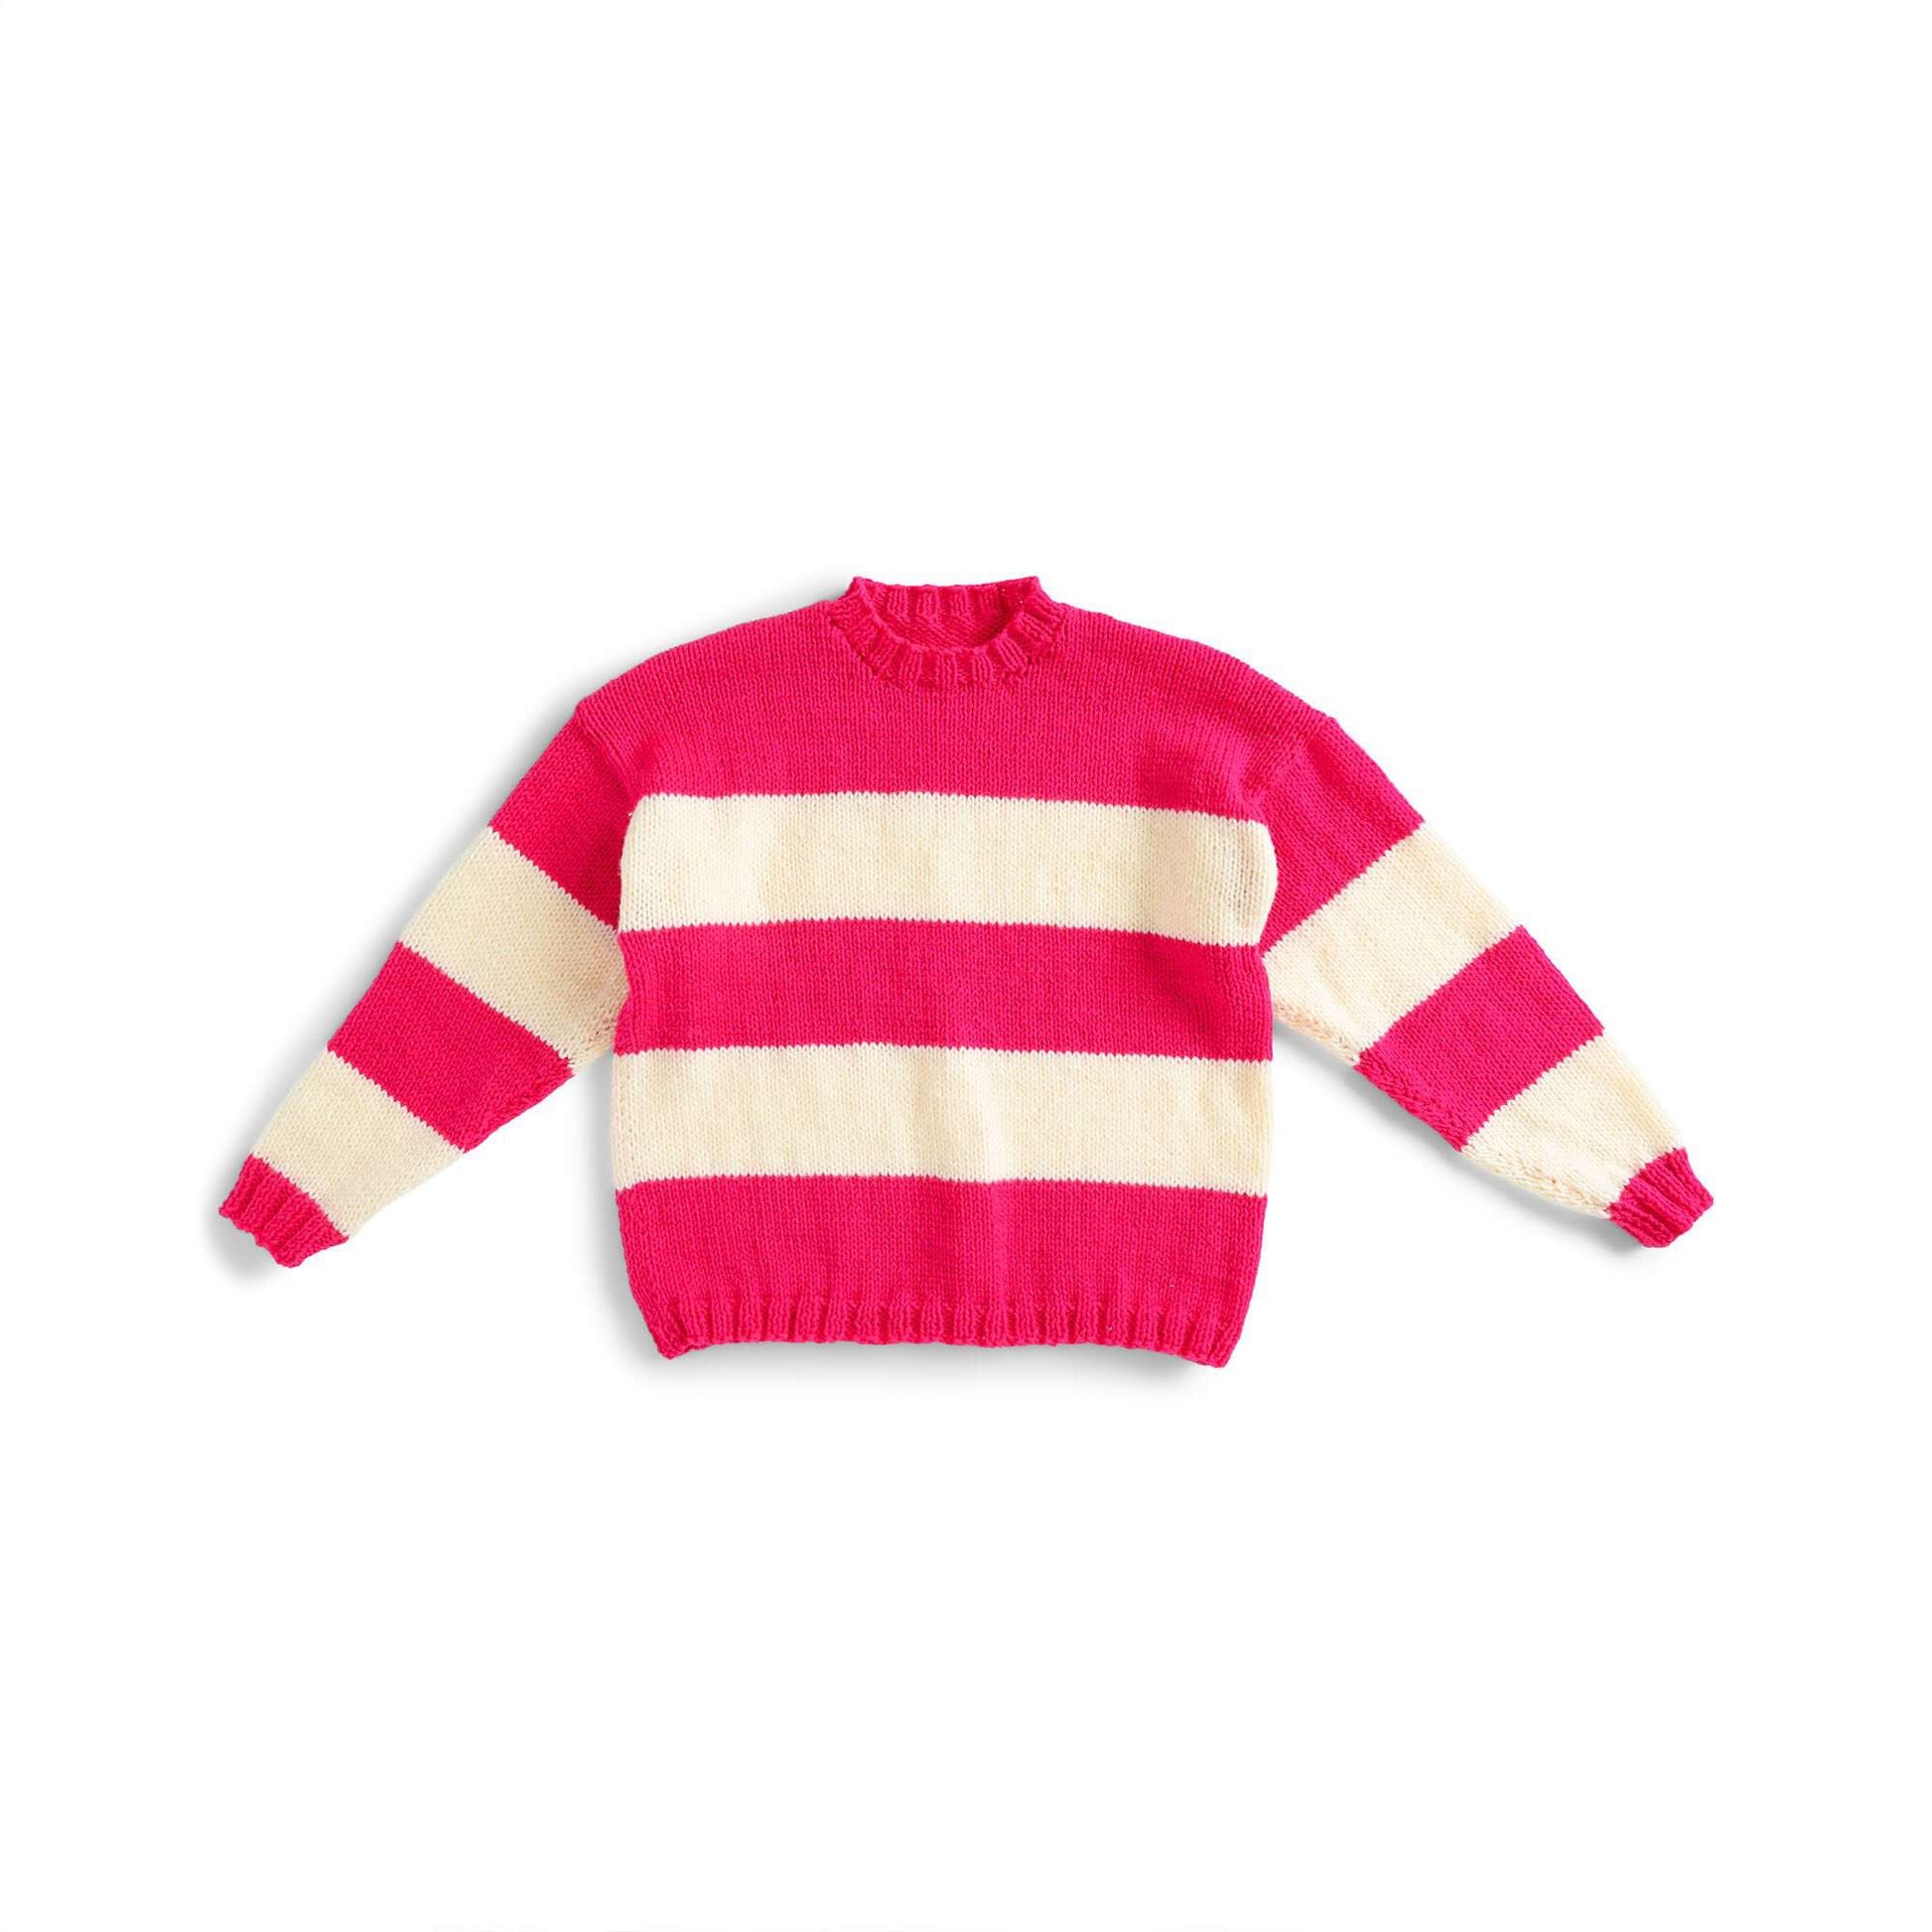 Free Red Heart Statement Stripes Knit Sweater Pattern